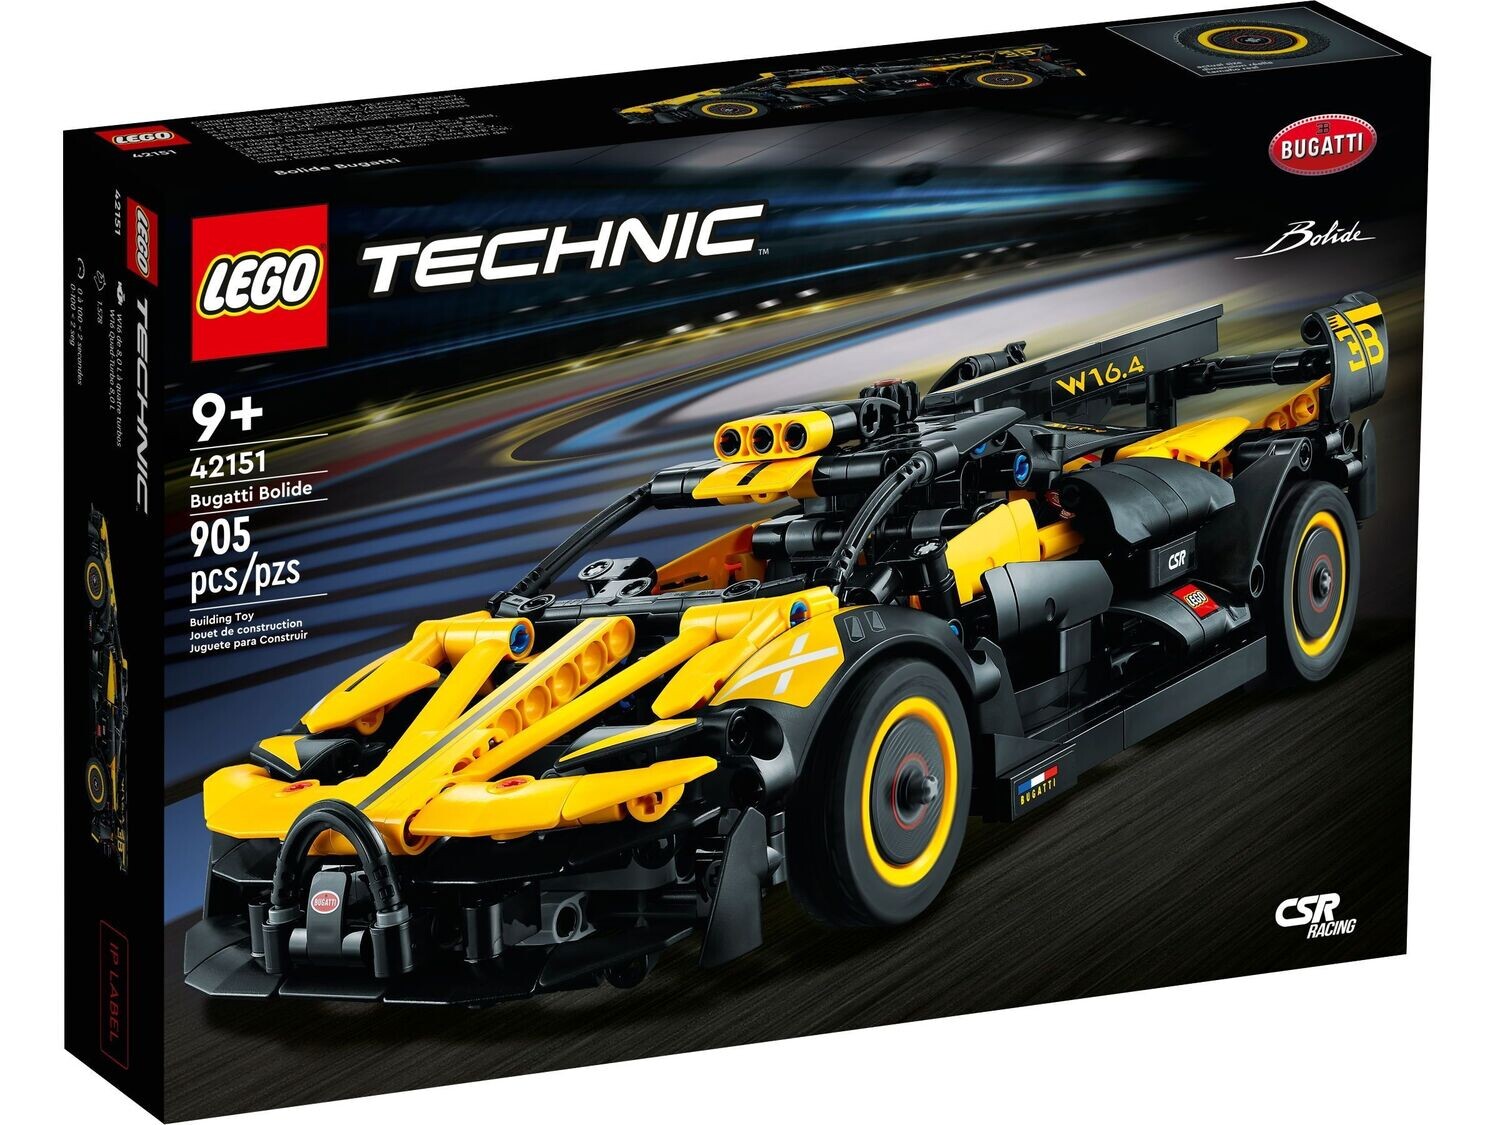 LEGO Technic Bugatti Bolide Model Car Kit  - 42151